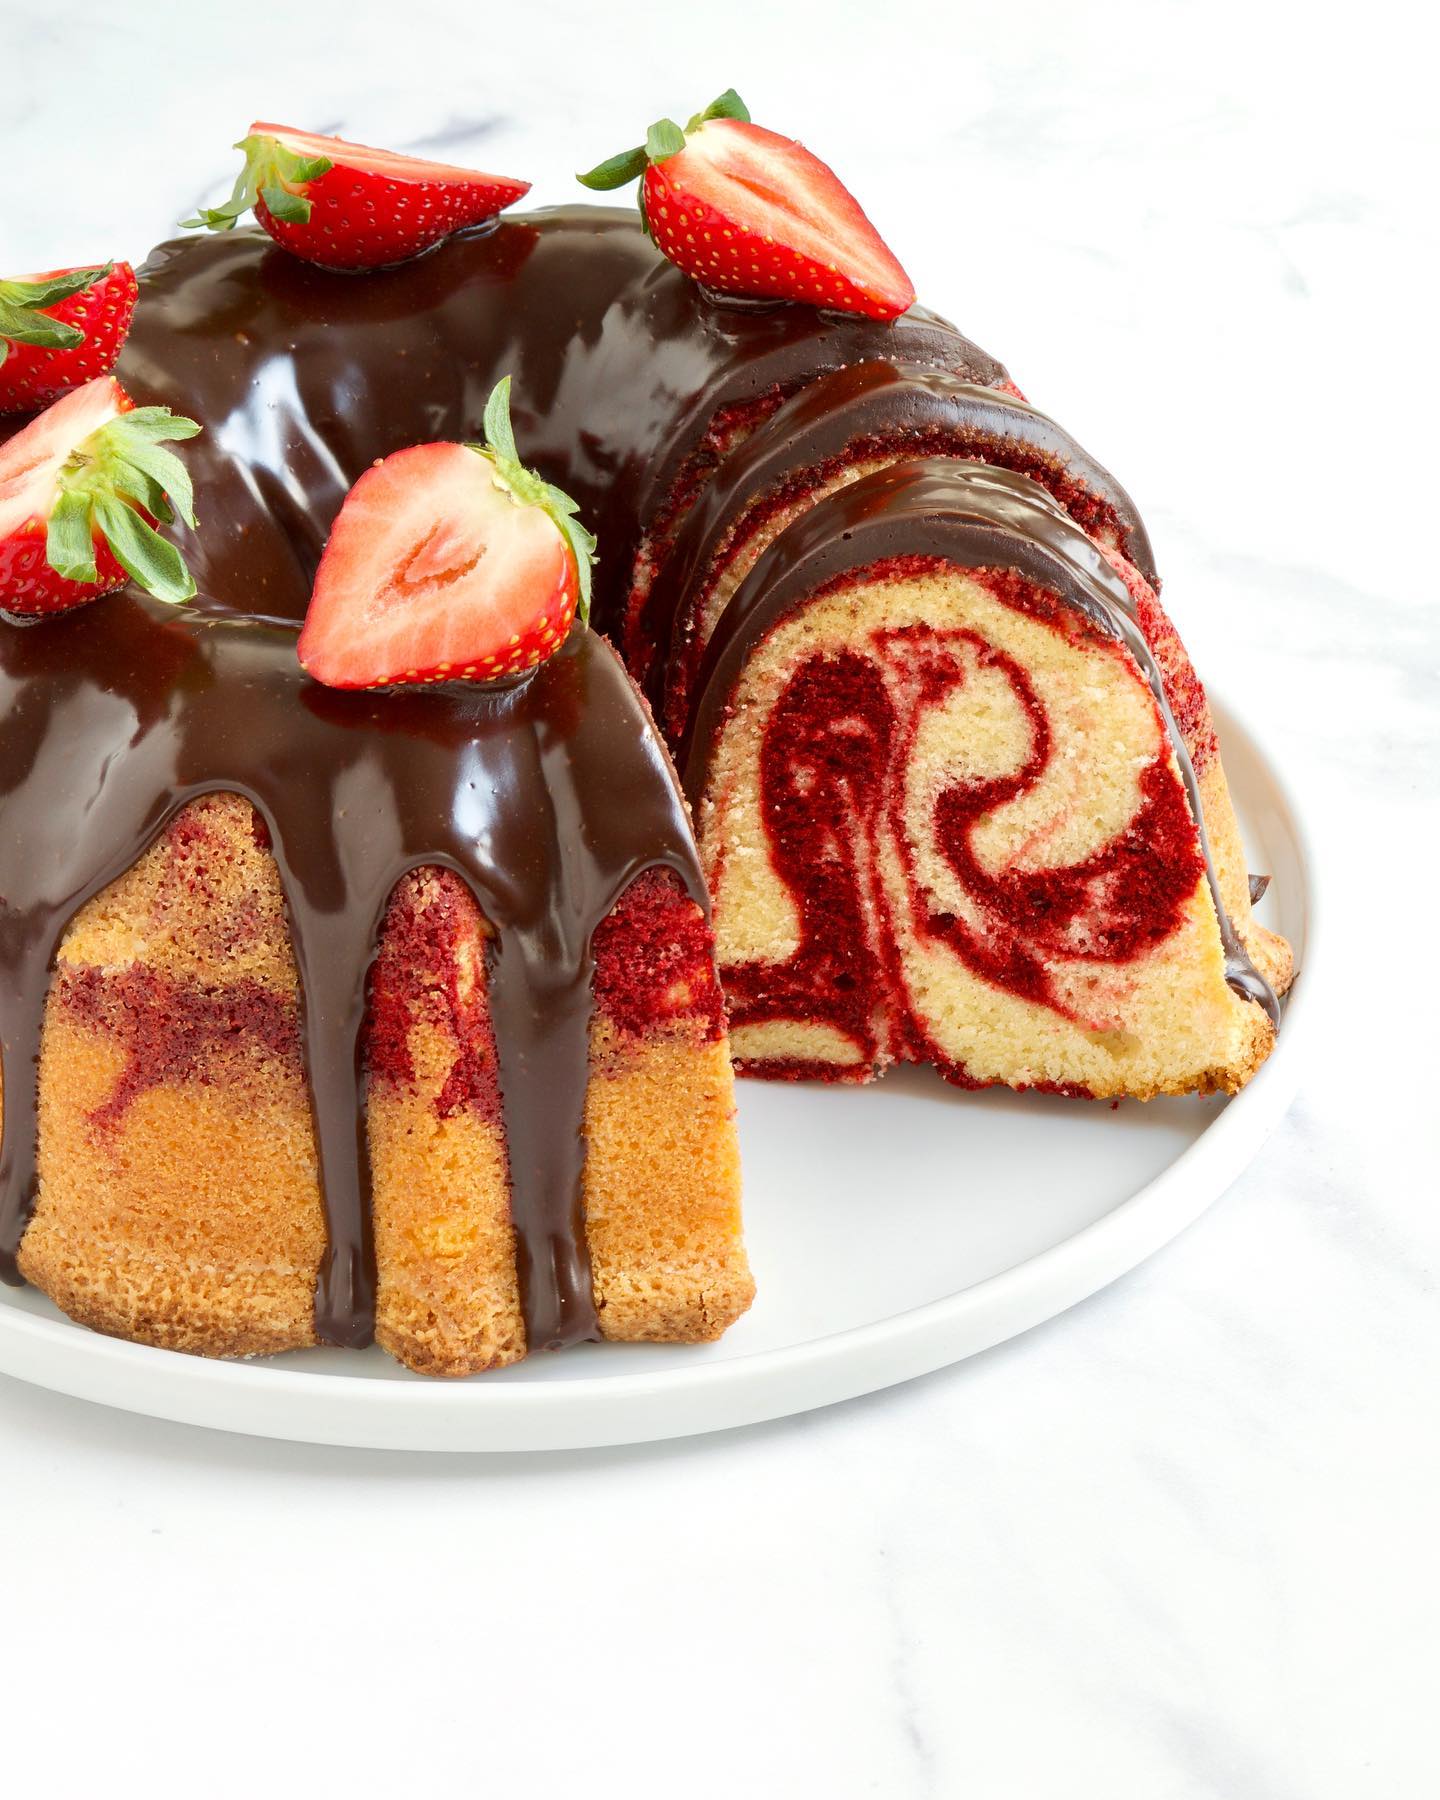 Strawberry-Swirl Bundt Cake Recipe